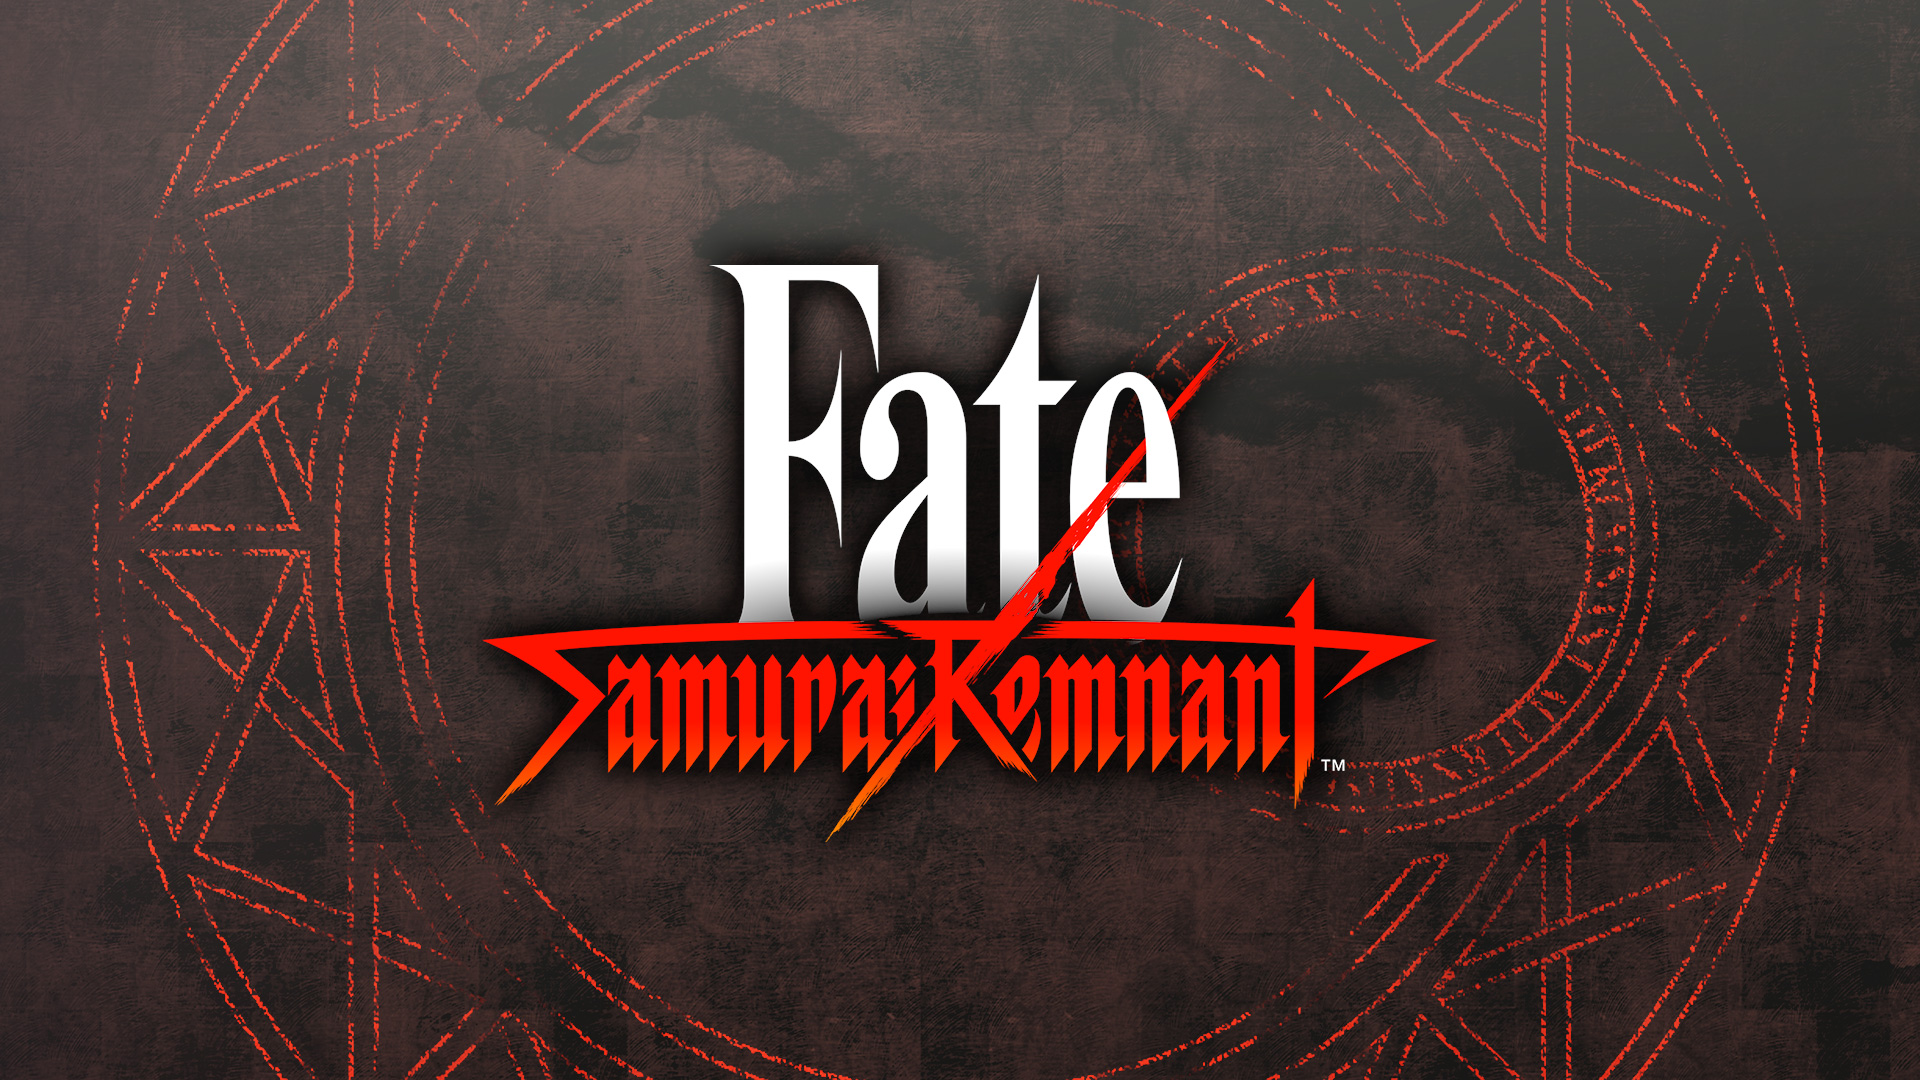 Fate/Samurai Remnant Digital Artbook & Soundtrack for Nintendo Switch -  Nintendo Official Site